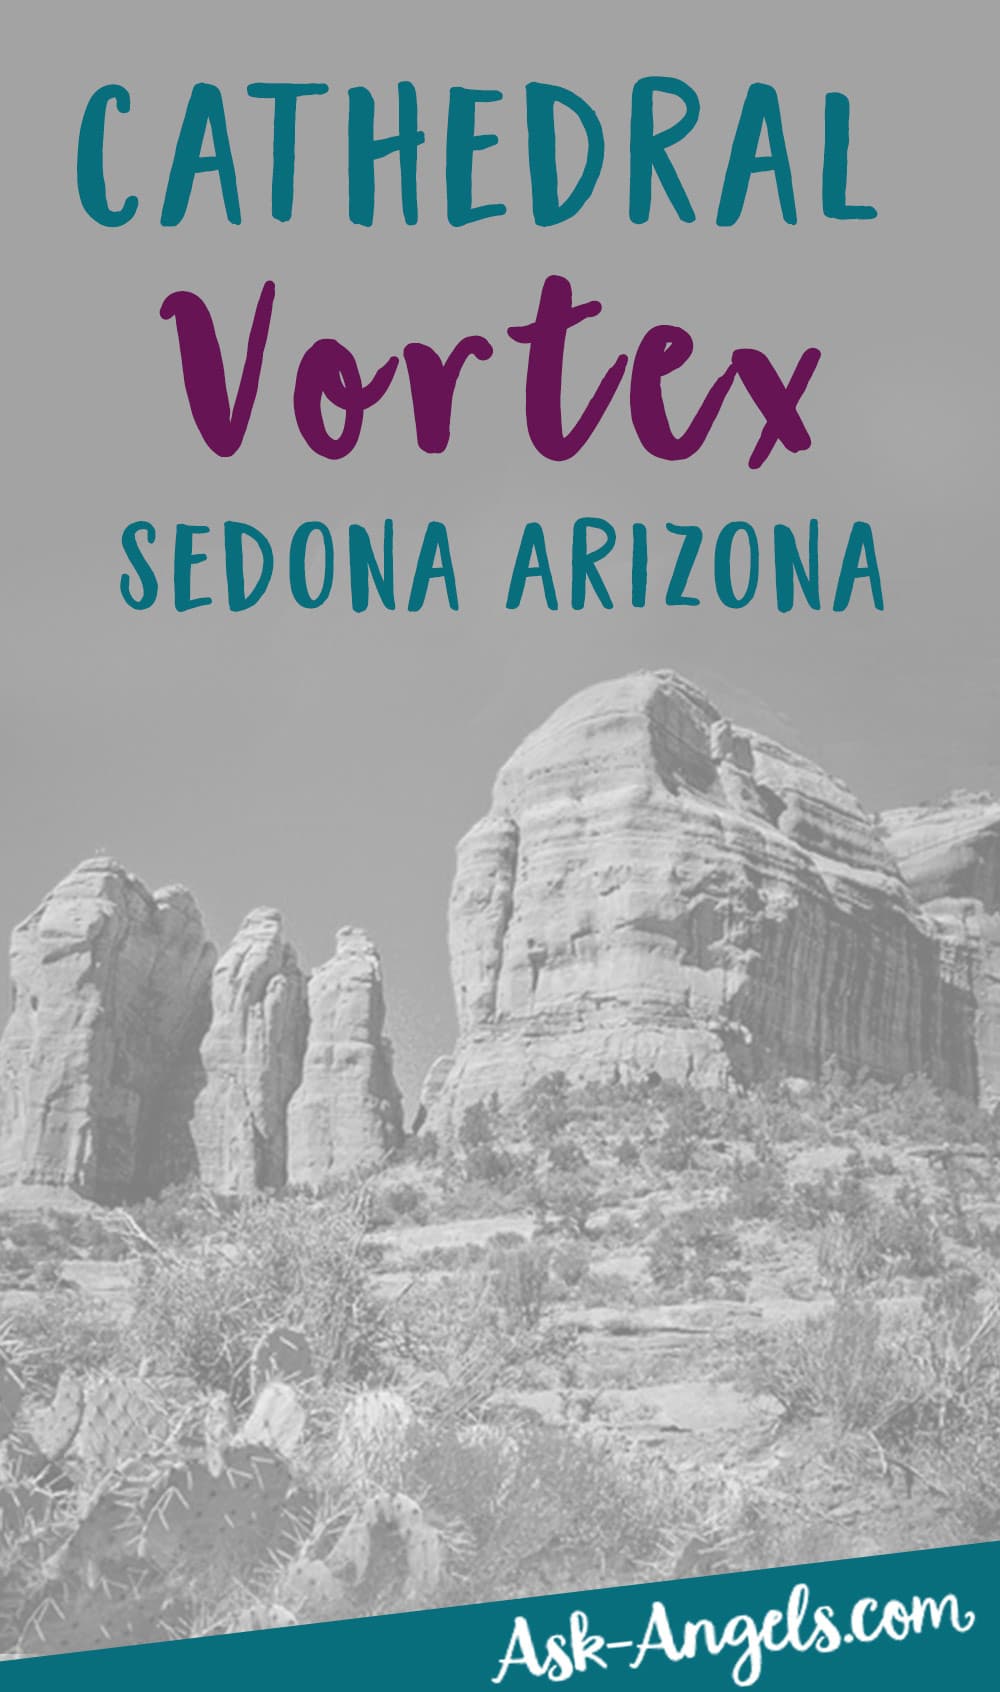 Cathedral Vortex Sedona Arizona